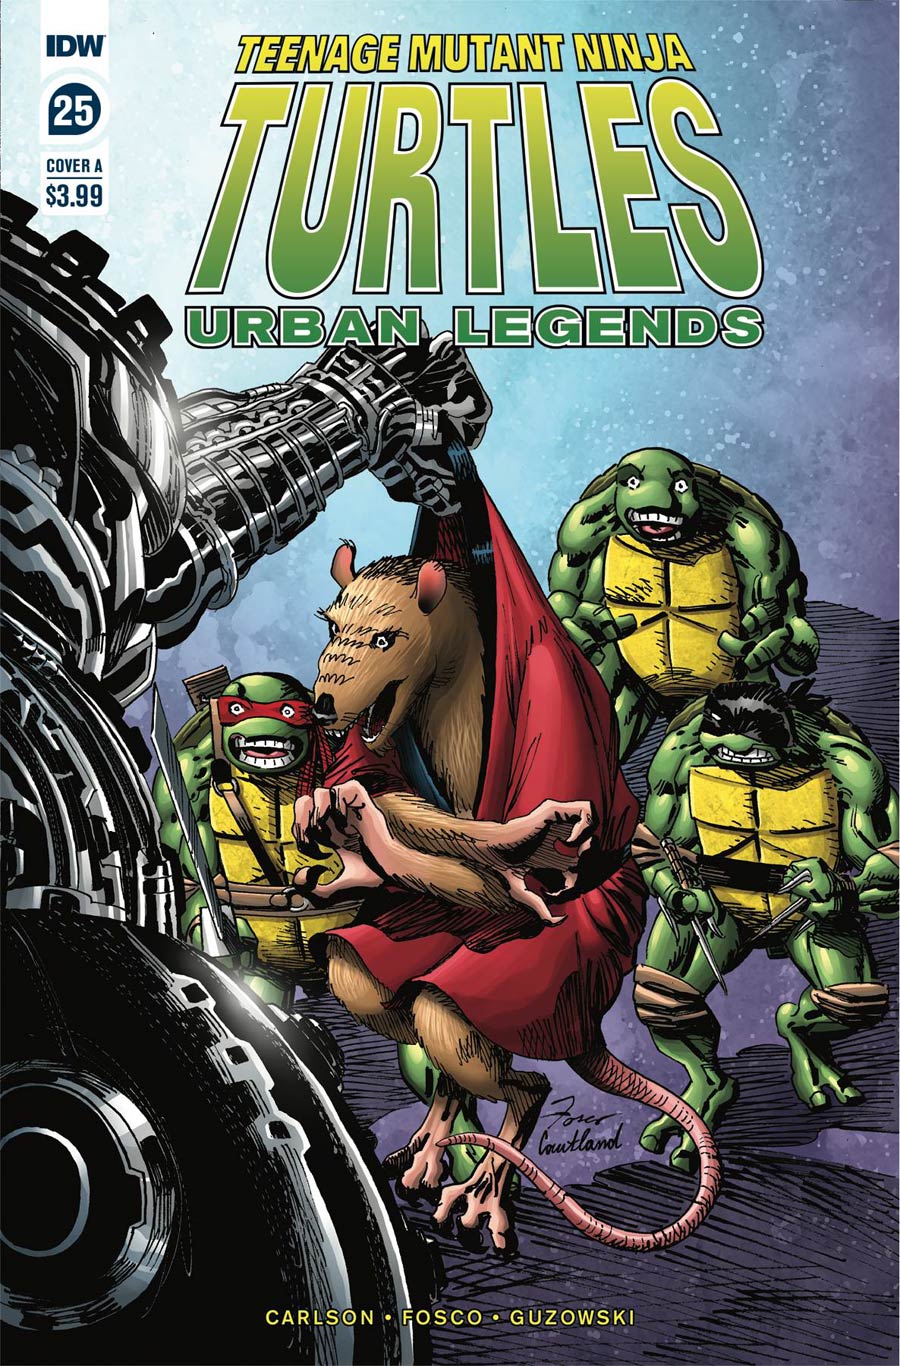 Teenage Mutant Ninja Turtles Urban Legends #25 Cover A Regular Frank Fosco Cover